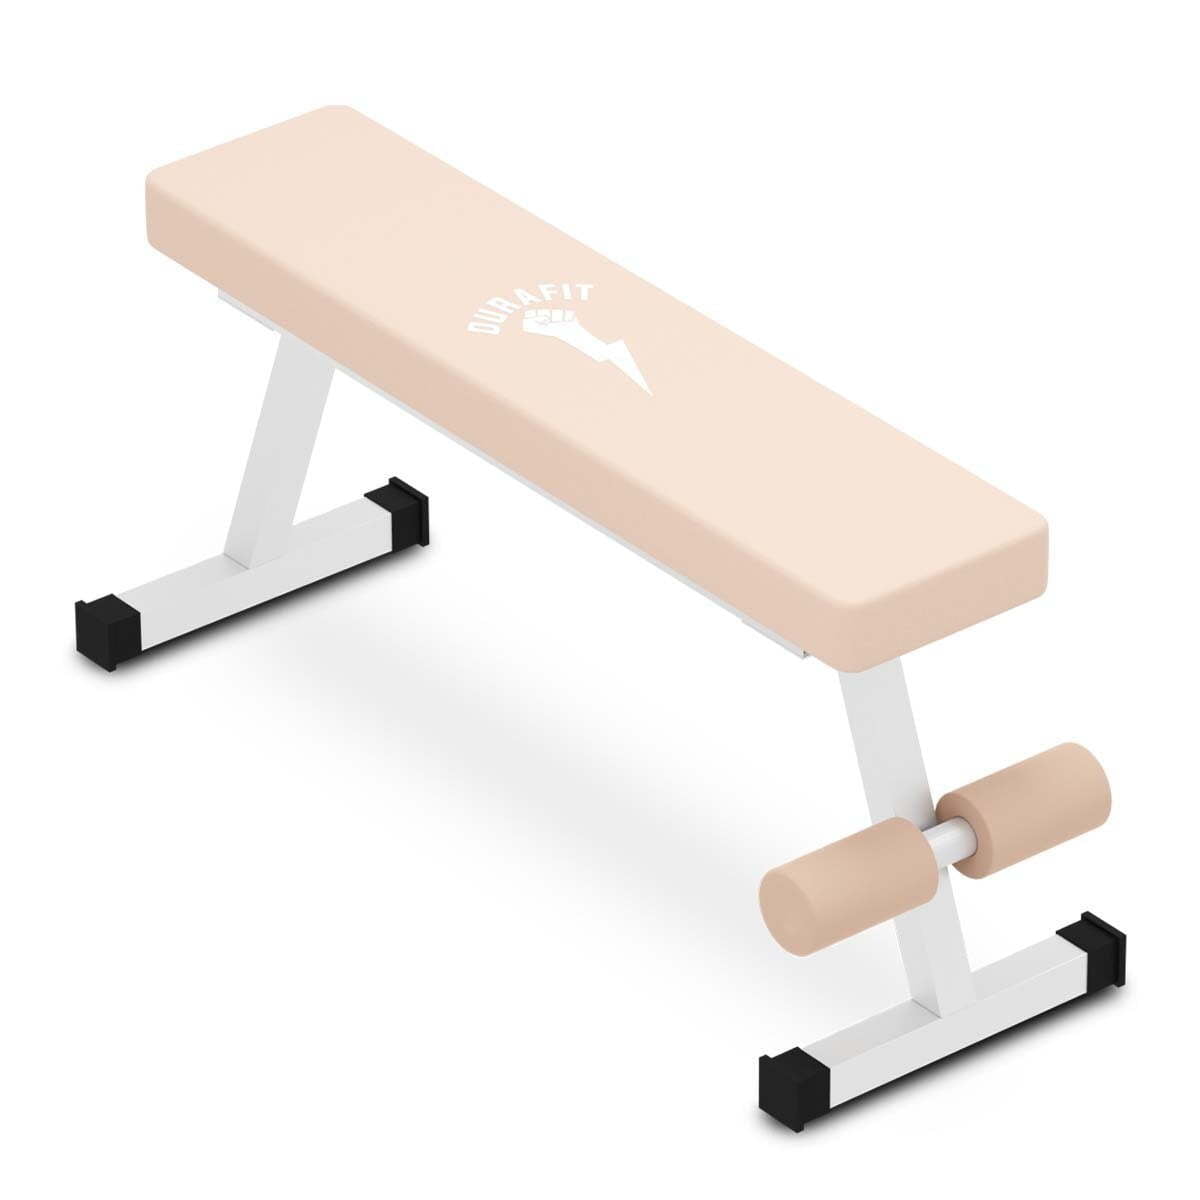 Durafit Simple Flat bench SB01-Peach